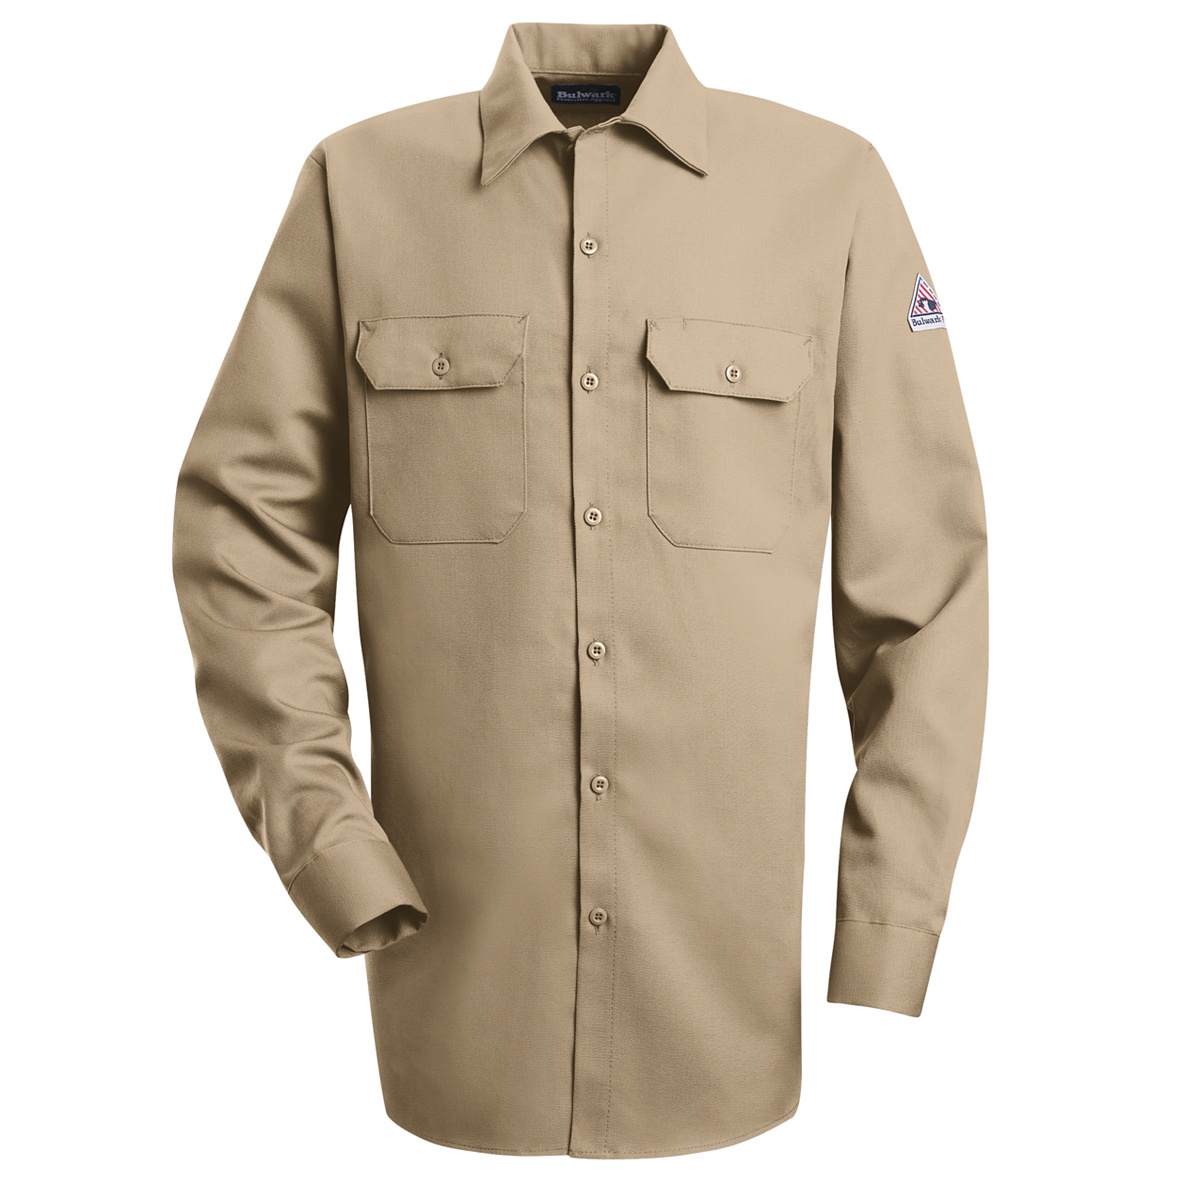 Bulwark® Medium Regular Khaki Westex Ultrasoft®/Cotton/Nylon Flame Resistant Work Shirt With Button Front Closure